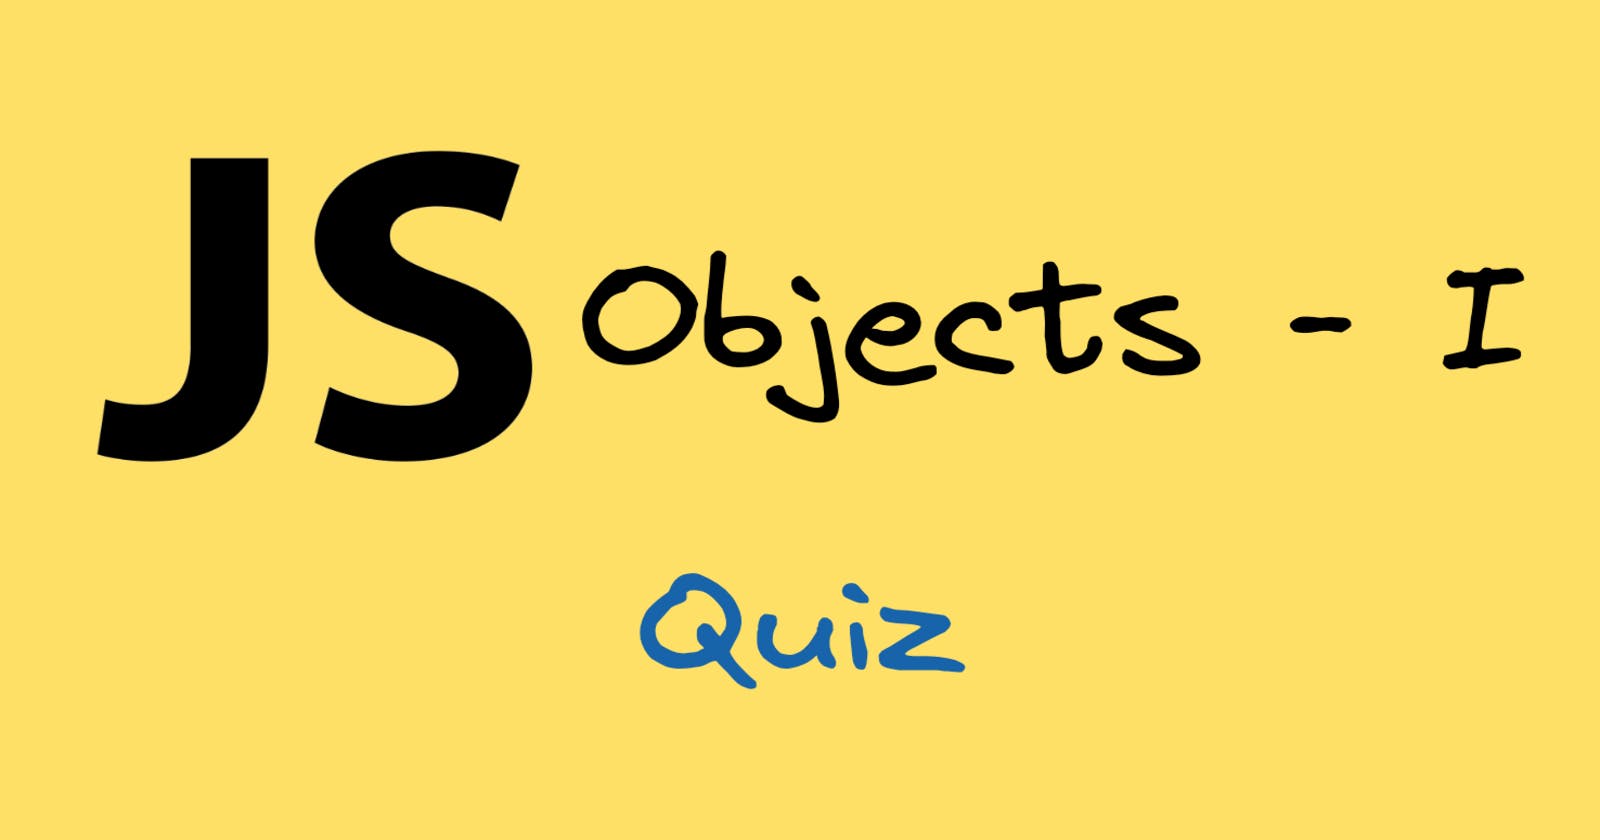 Hacking Javascript Objects - I Quiz